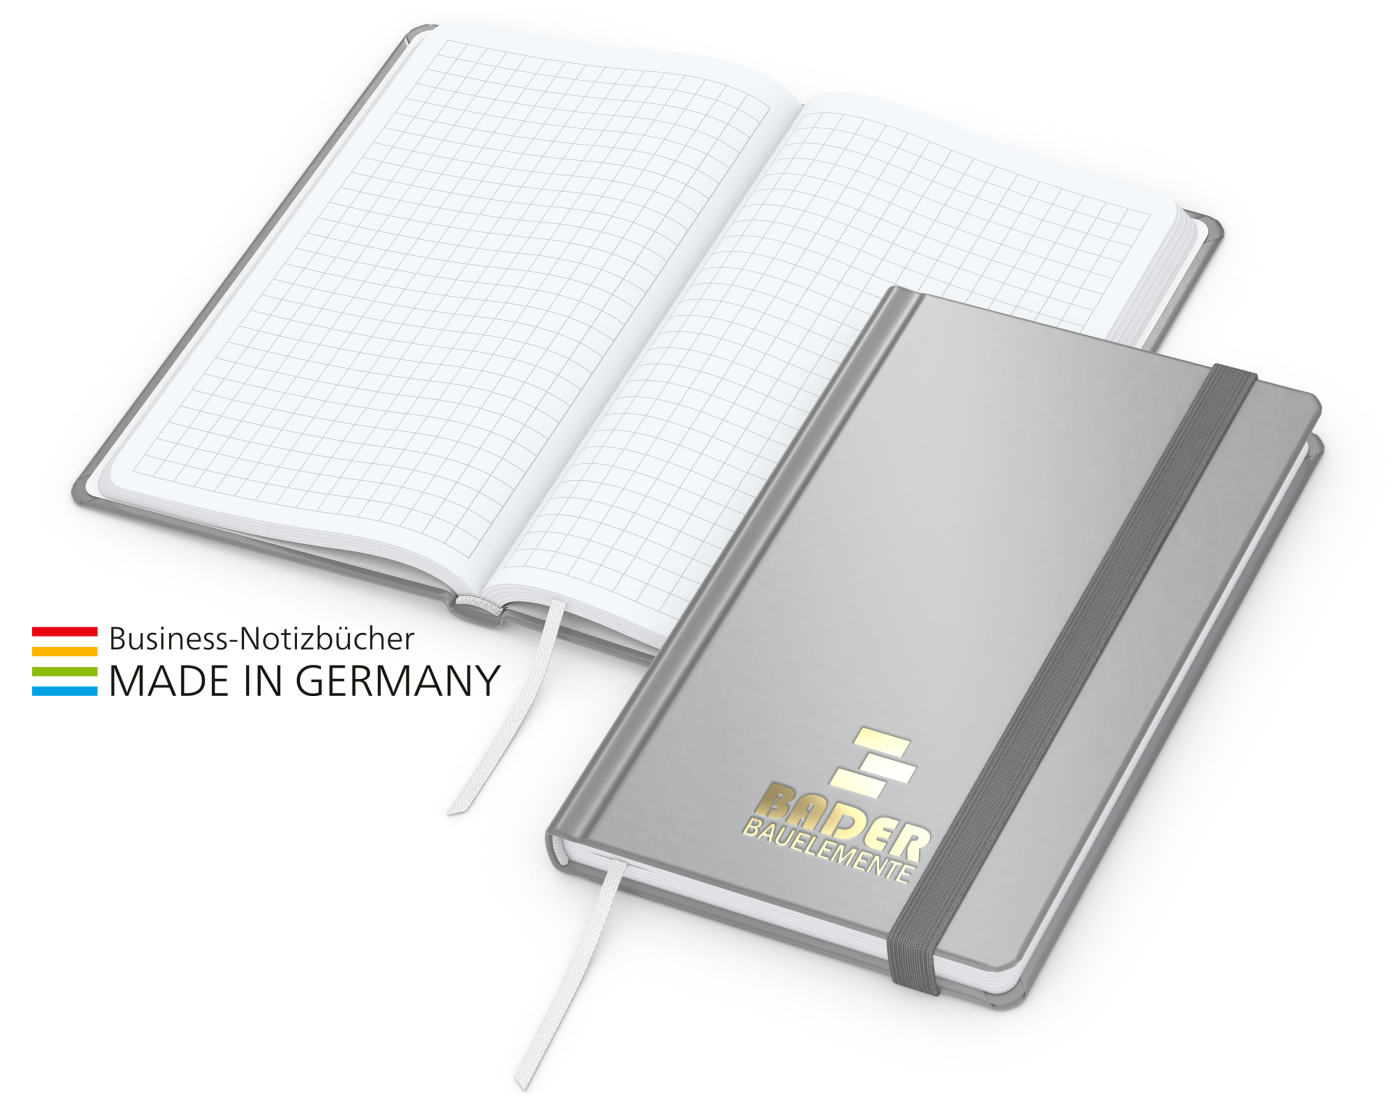 Notizbuch Easy-Book Comfort Bestseller Pocket, silber inkl. Goldprägung